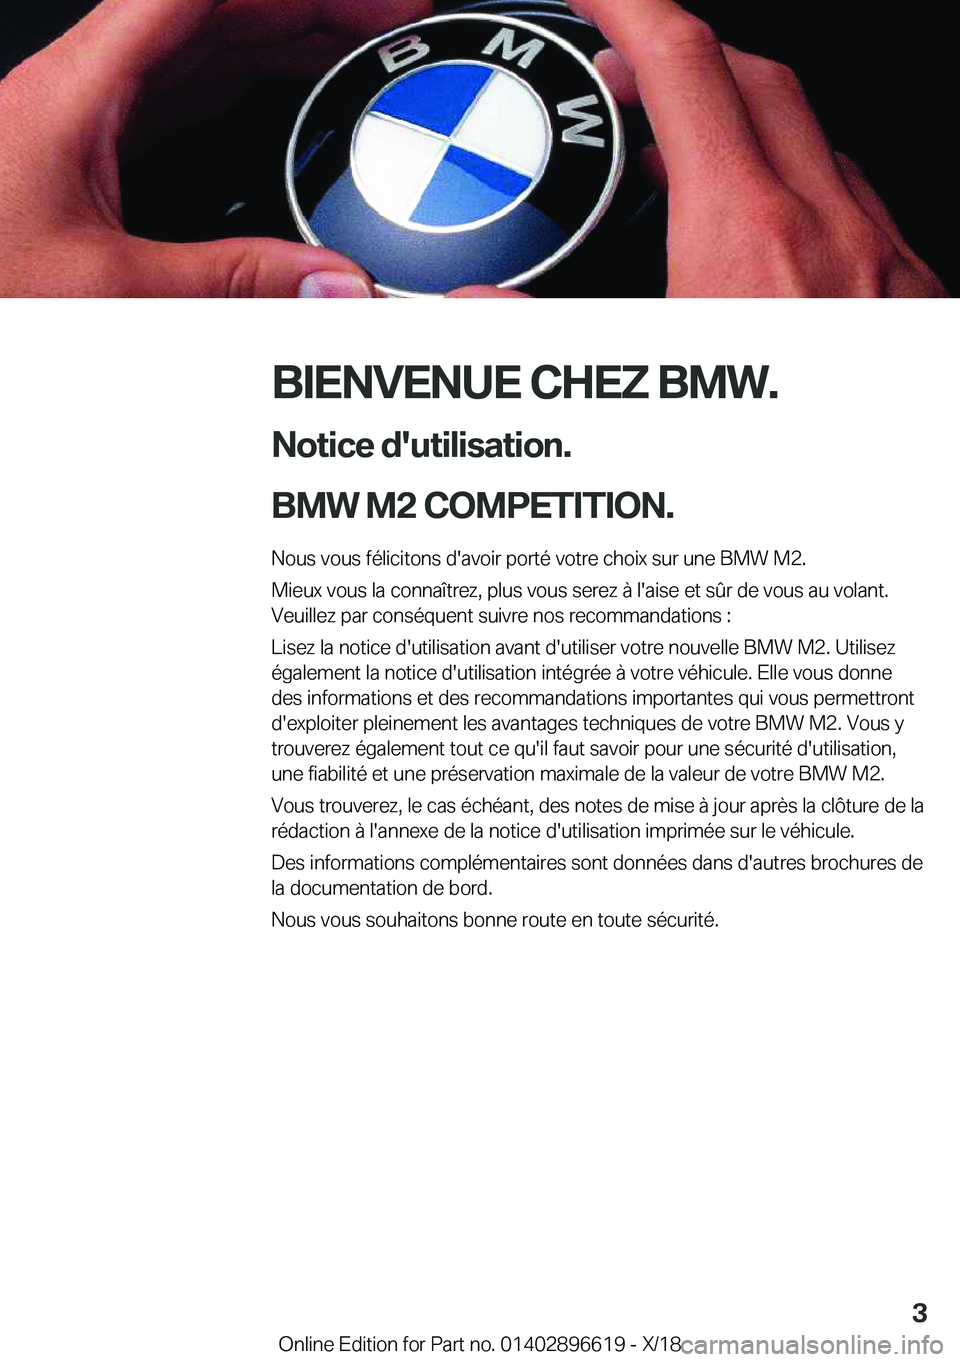 BMW M2 2019  Notices Demploi (in French) �B�I�E�N�V�E�N�U�E��C�H�E�;��B�M�W�.�N�o�t�i�c�e��d�'�u�t�i�l�i�s�a�t�i�o�n�.
�B�M�W��M�2��C�O�M�P�E�T�I�T�I�O�N�.� �N�o�u�s��v�o�u�s��f�é�l�i�c�i�t�o�n�s��d�'�a�v�o�i�r��p�o�r�t�é